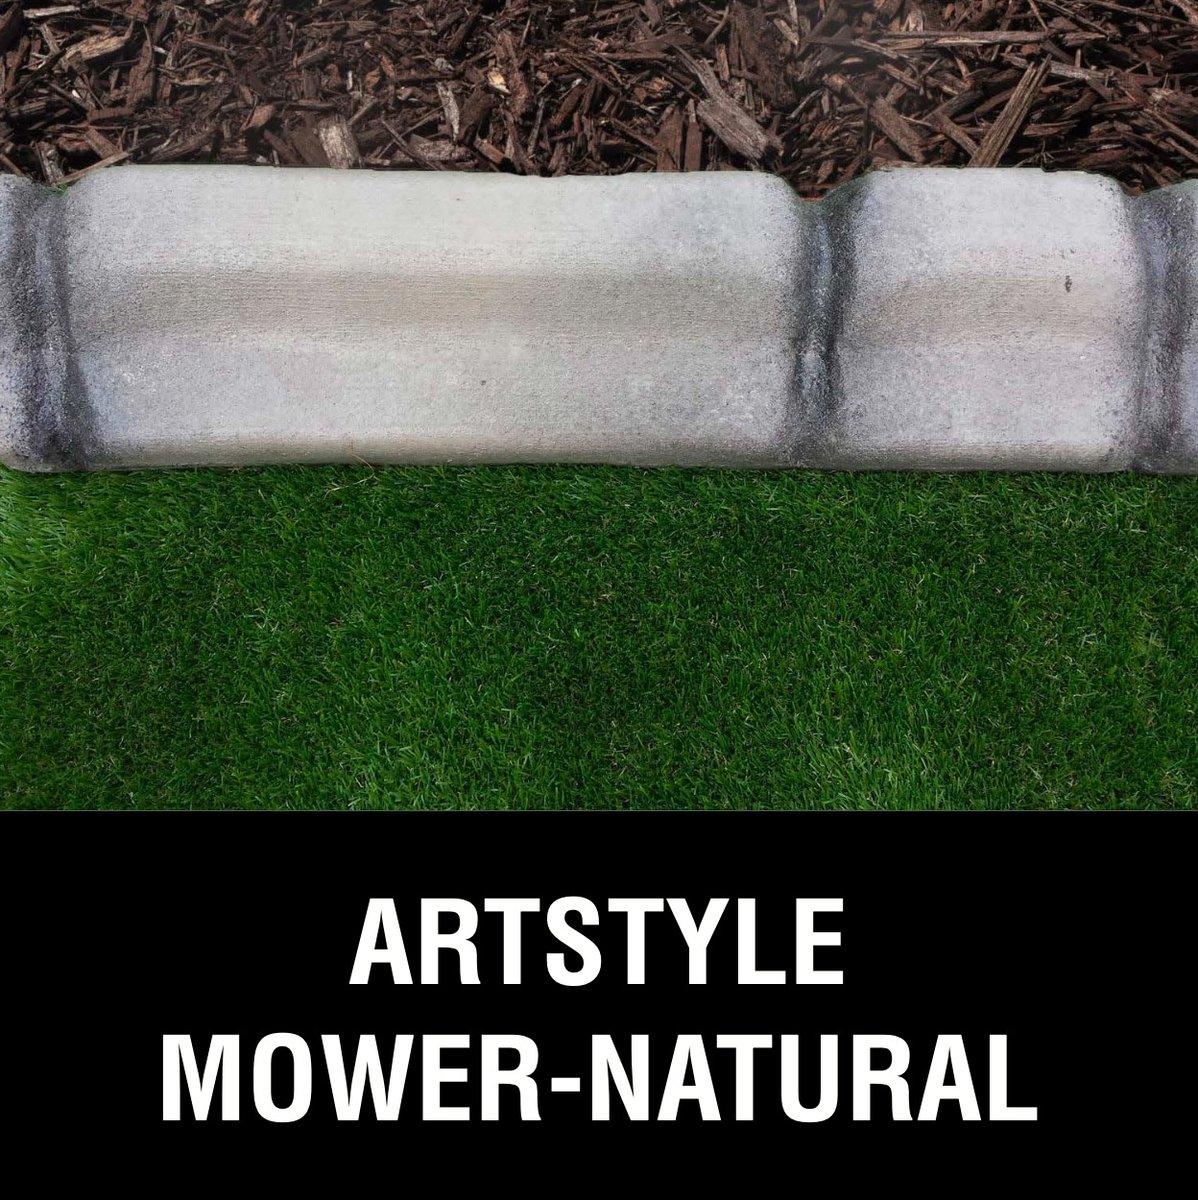 Artstyle Mower-Natural - Artistic